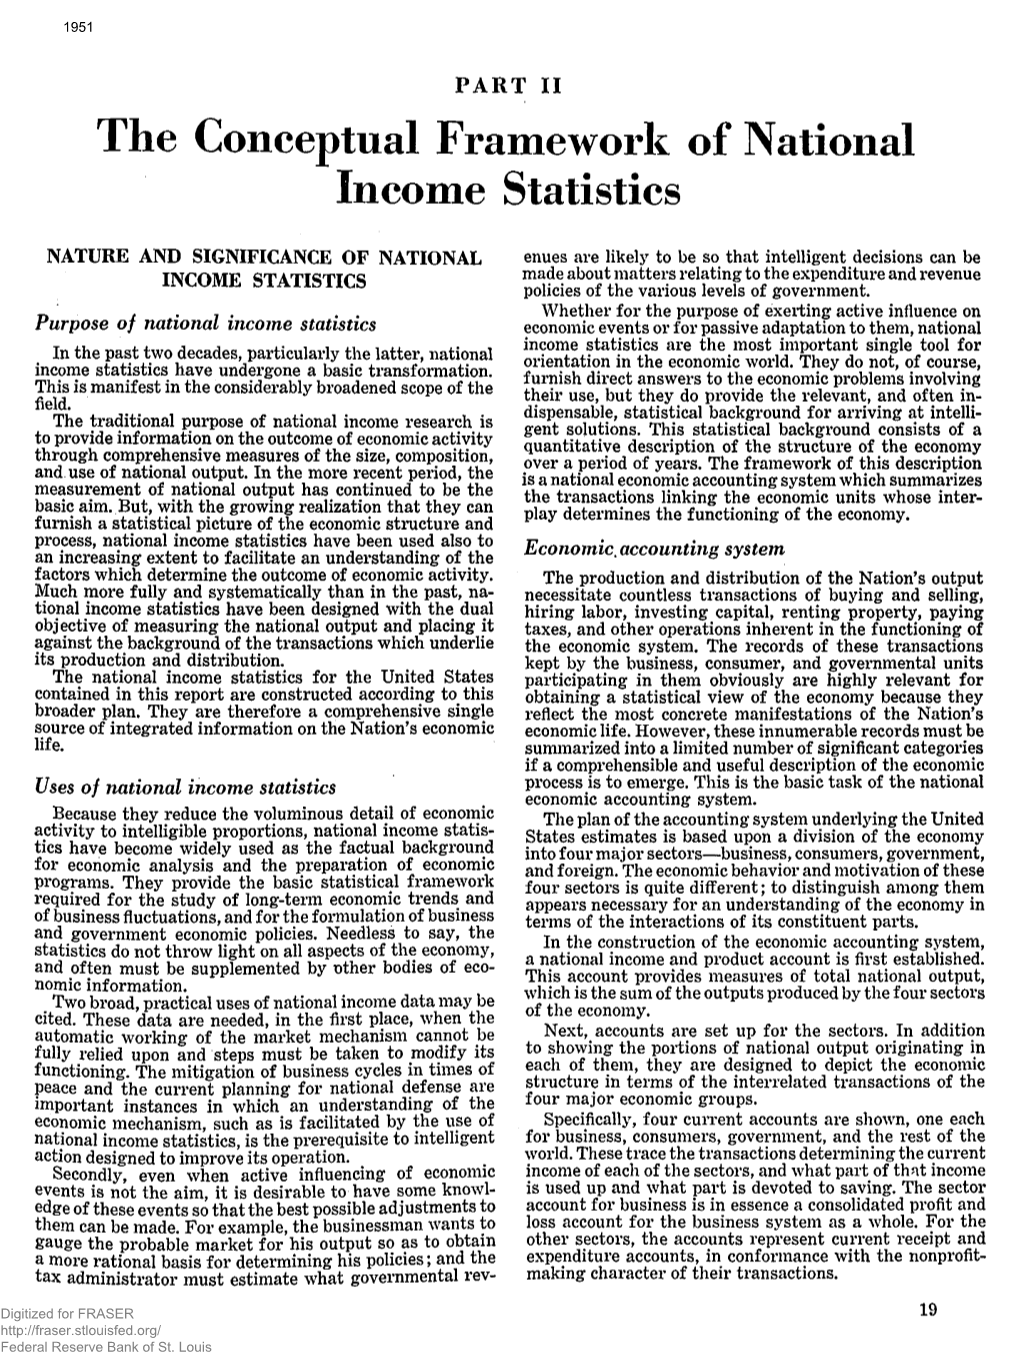 Conceptual Framework of National Income Statistics